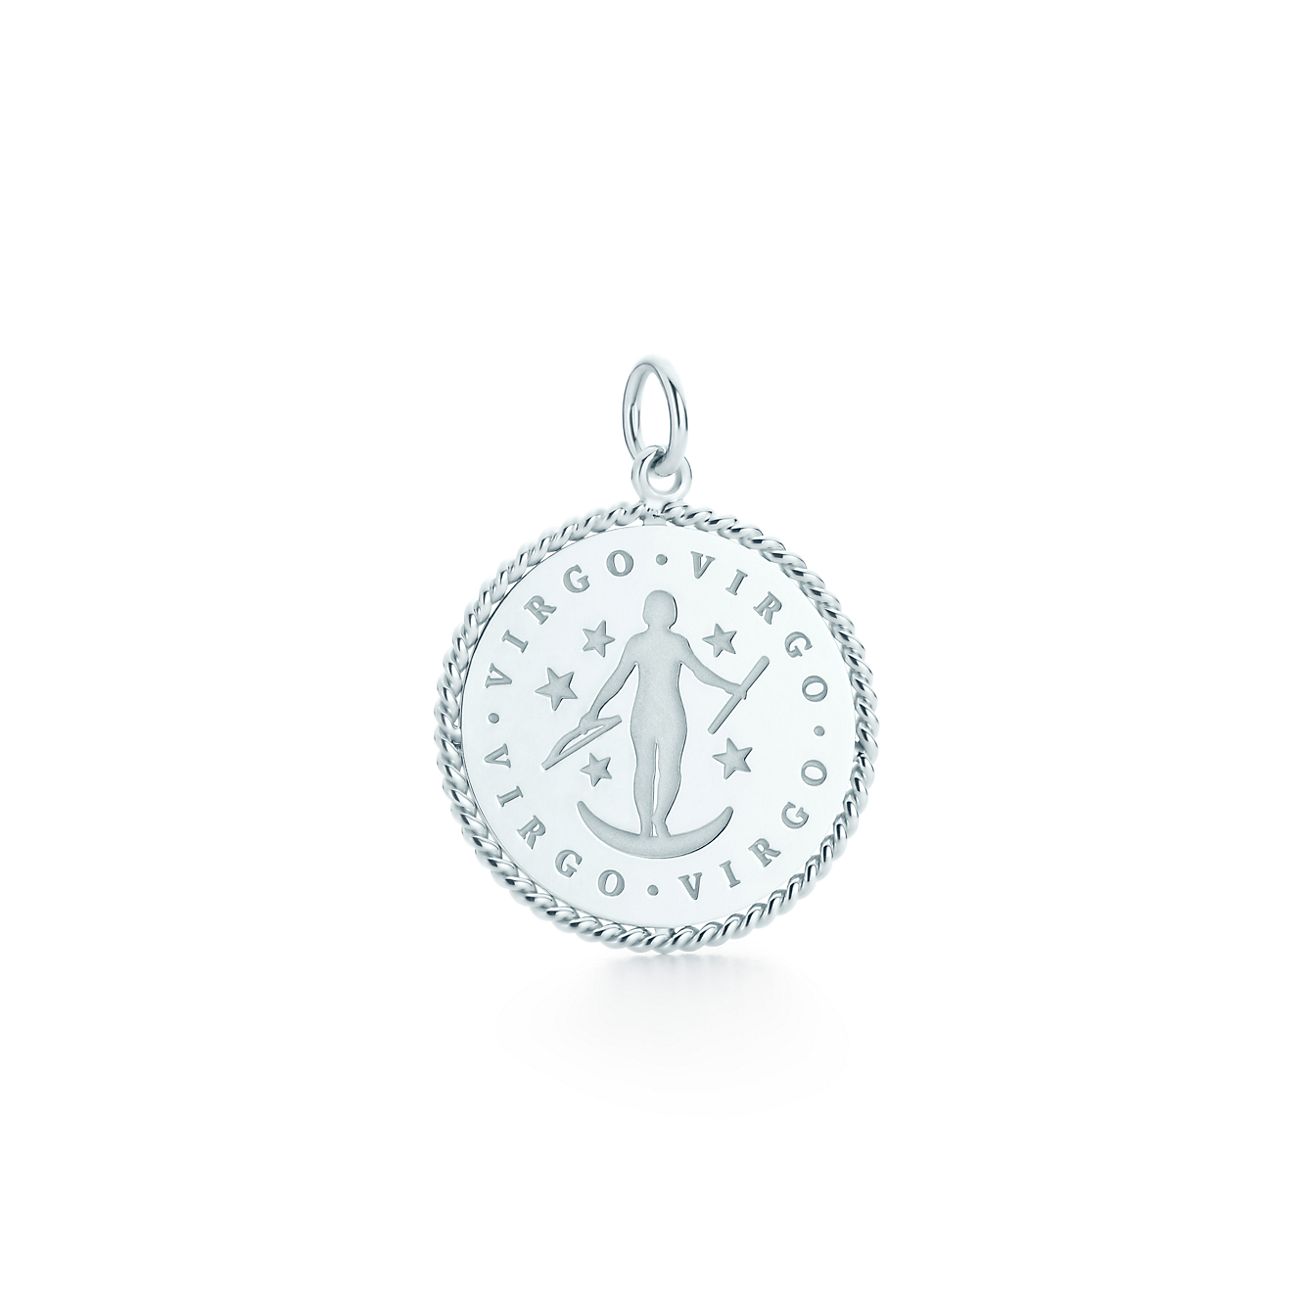 Virgo zodiac charm in sterling silver 